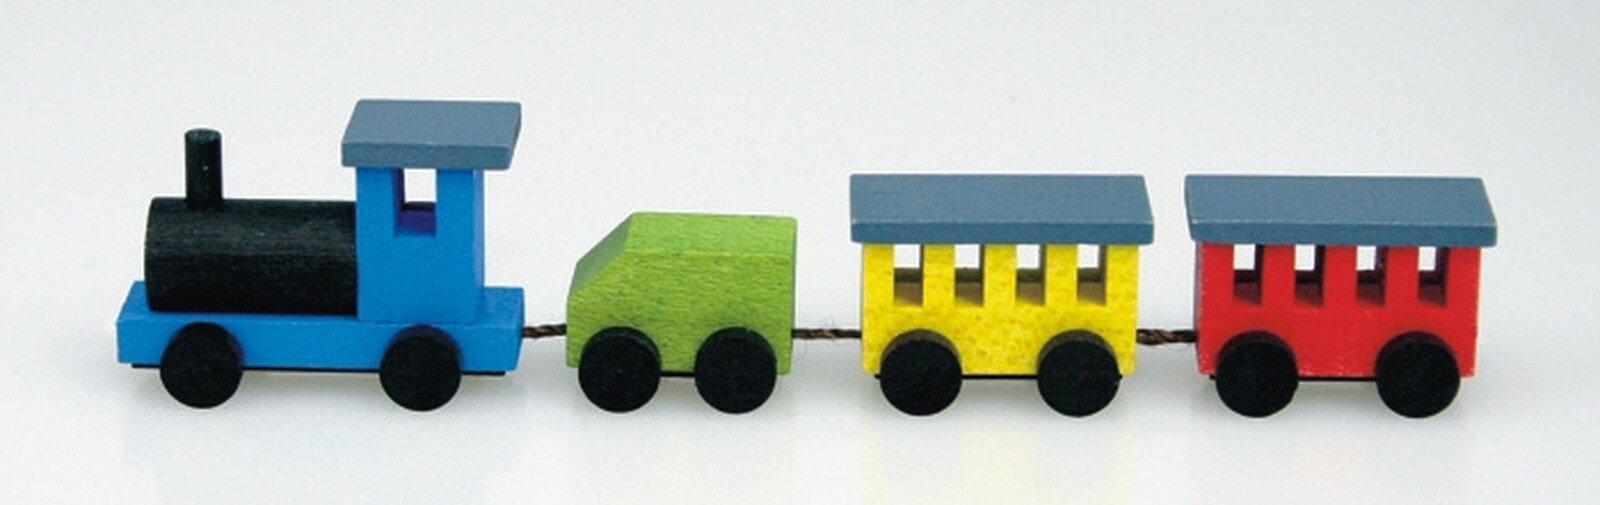 Mini - Holzeisenbahn, farbig von Stephan Kaden